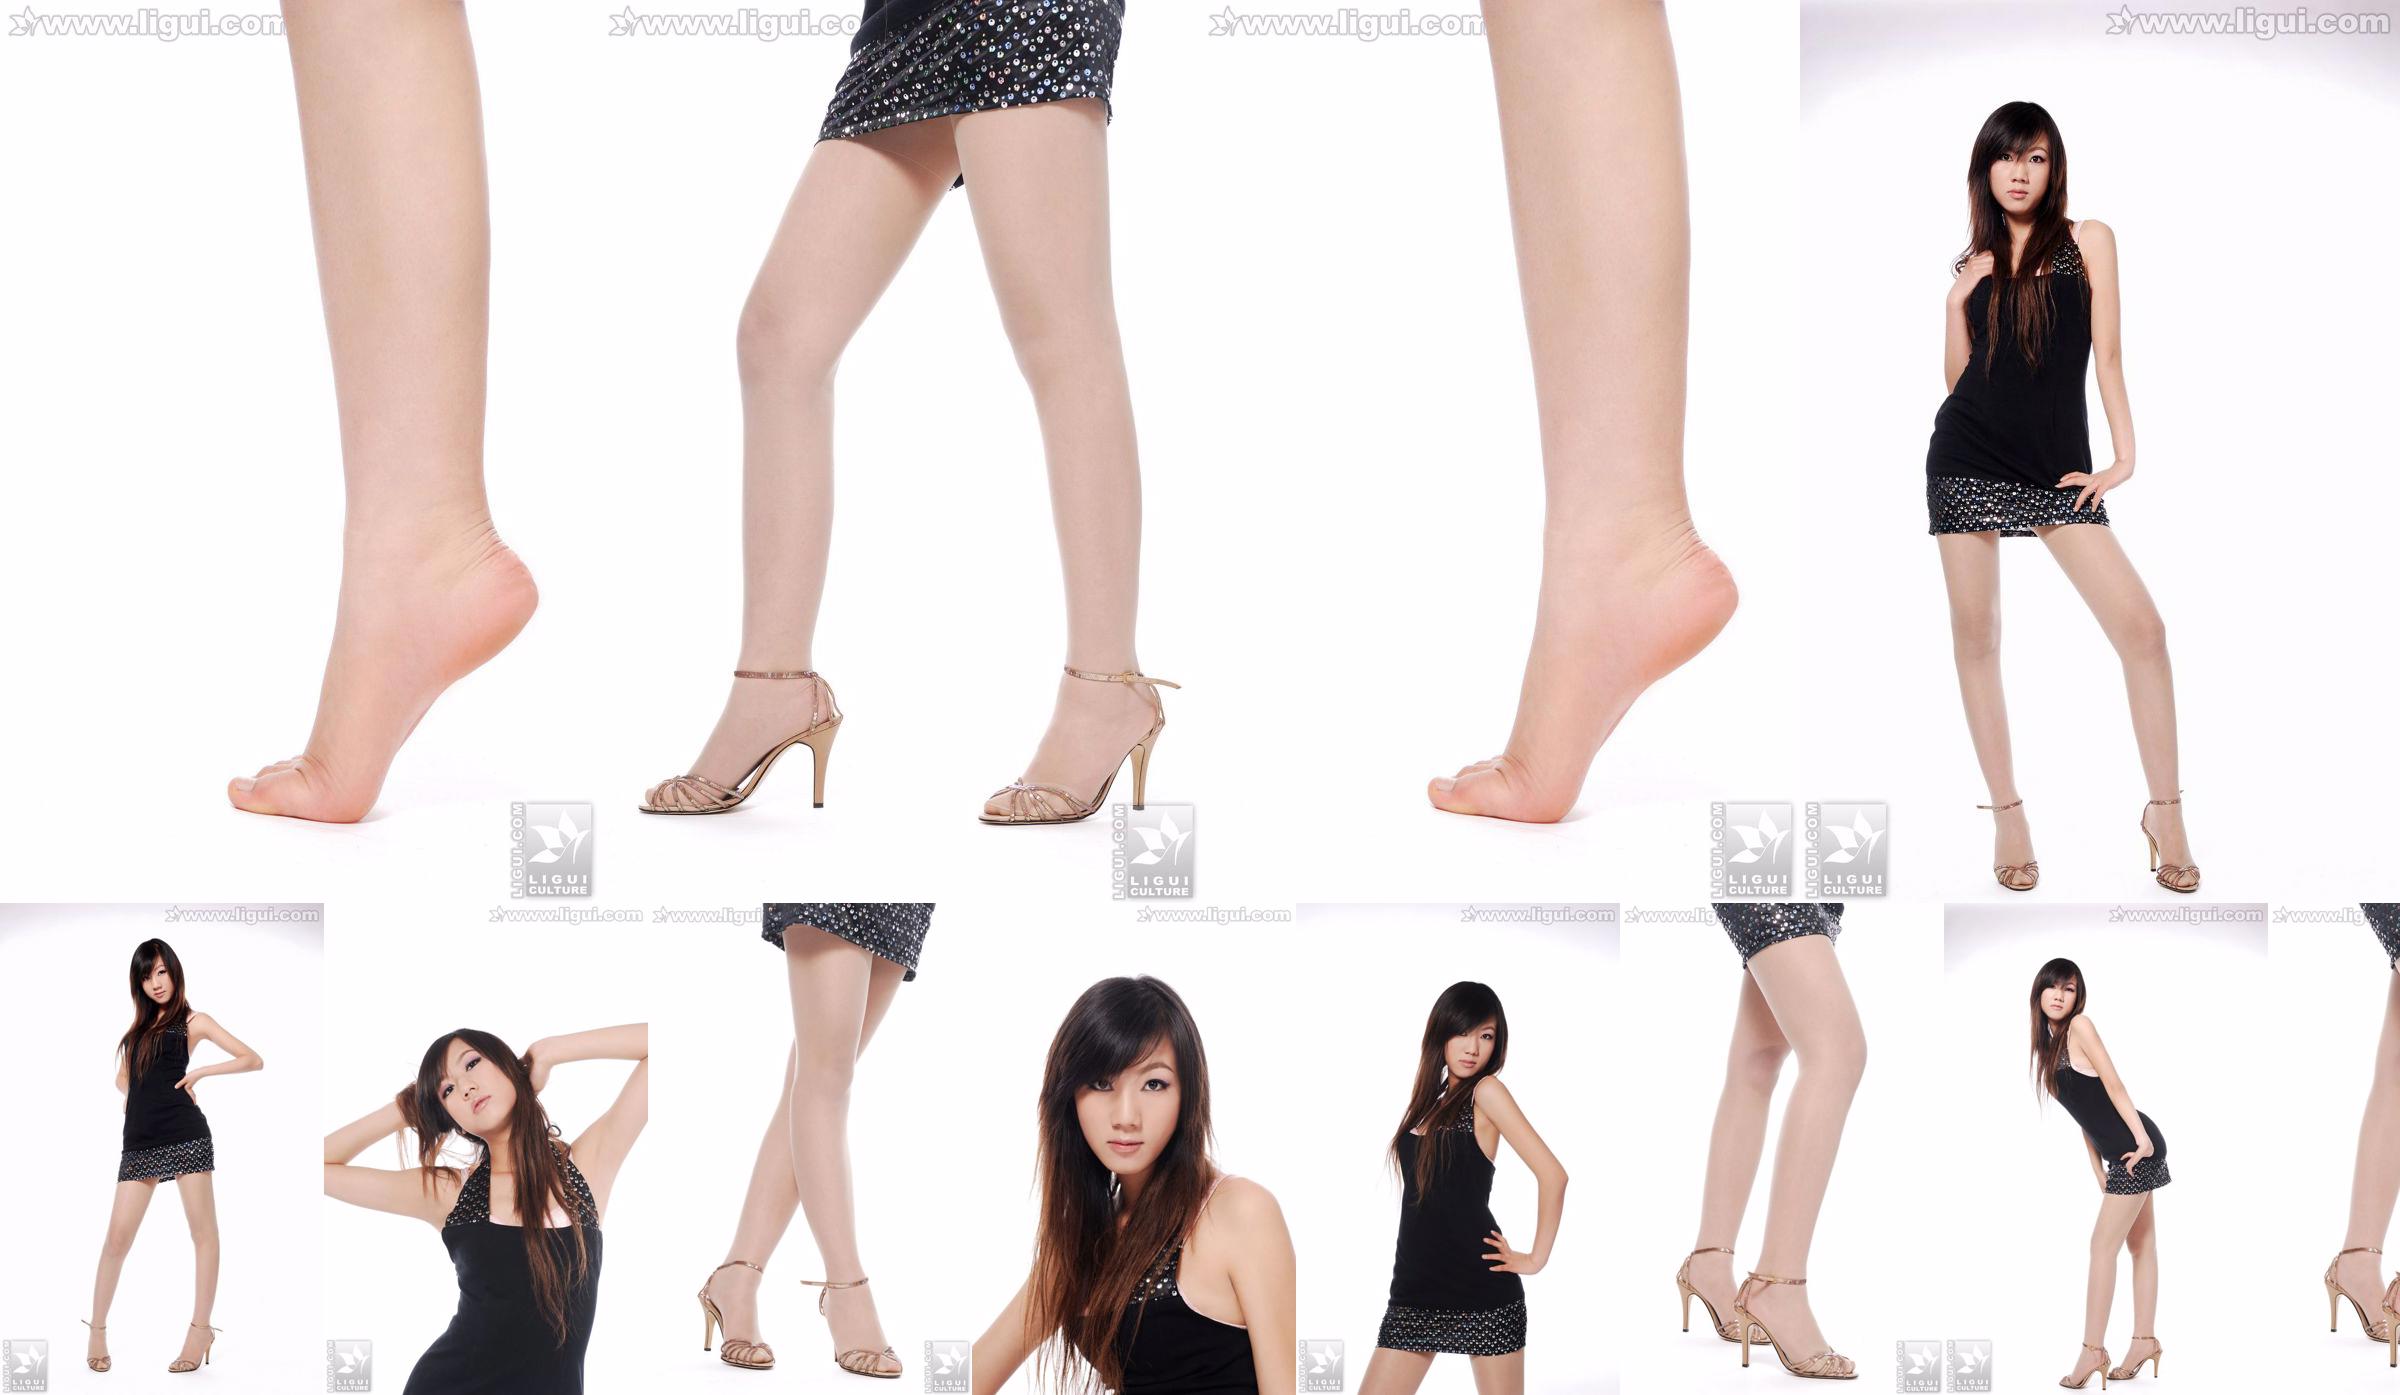 Model Sheng Chao „Nefrytowa stopa na wysokim obcasie Piękny nowy pokaz” [Sheng LiGui] Zdjęcie pięknych nóg i nefrytowej stopy No.18e3d4 Strona 1